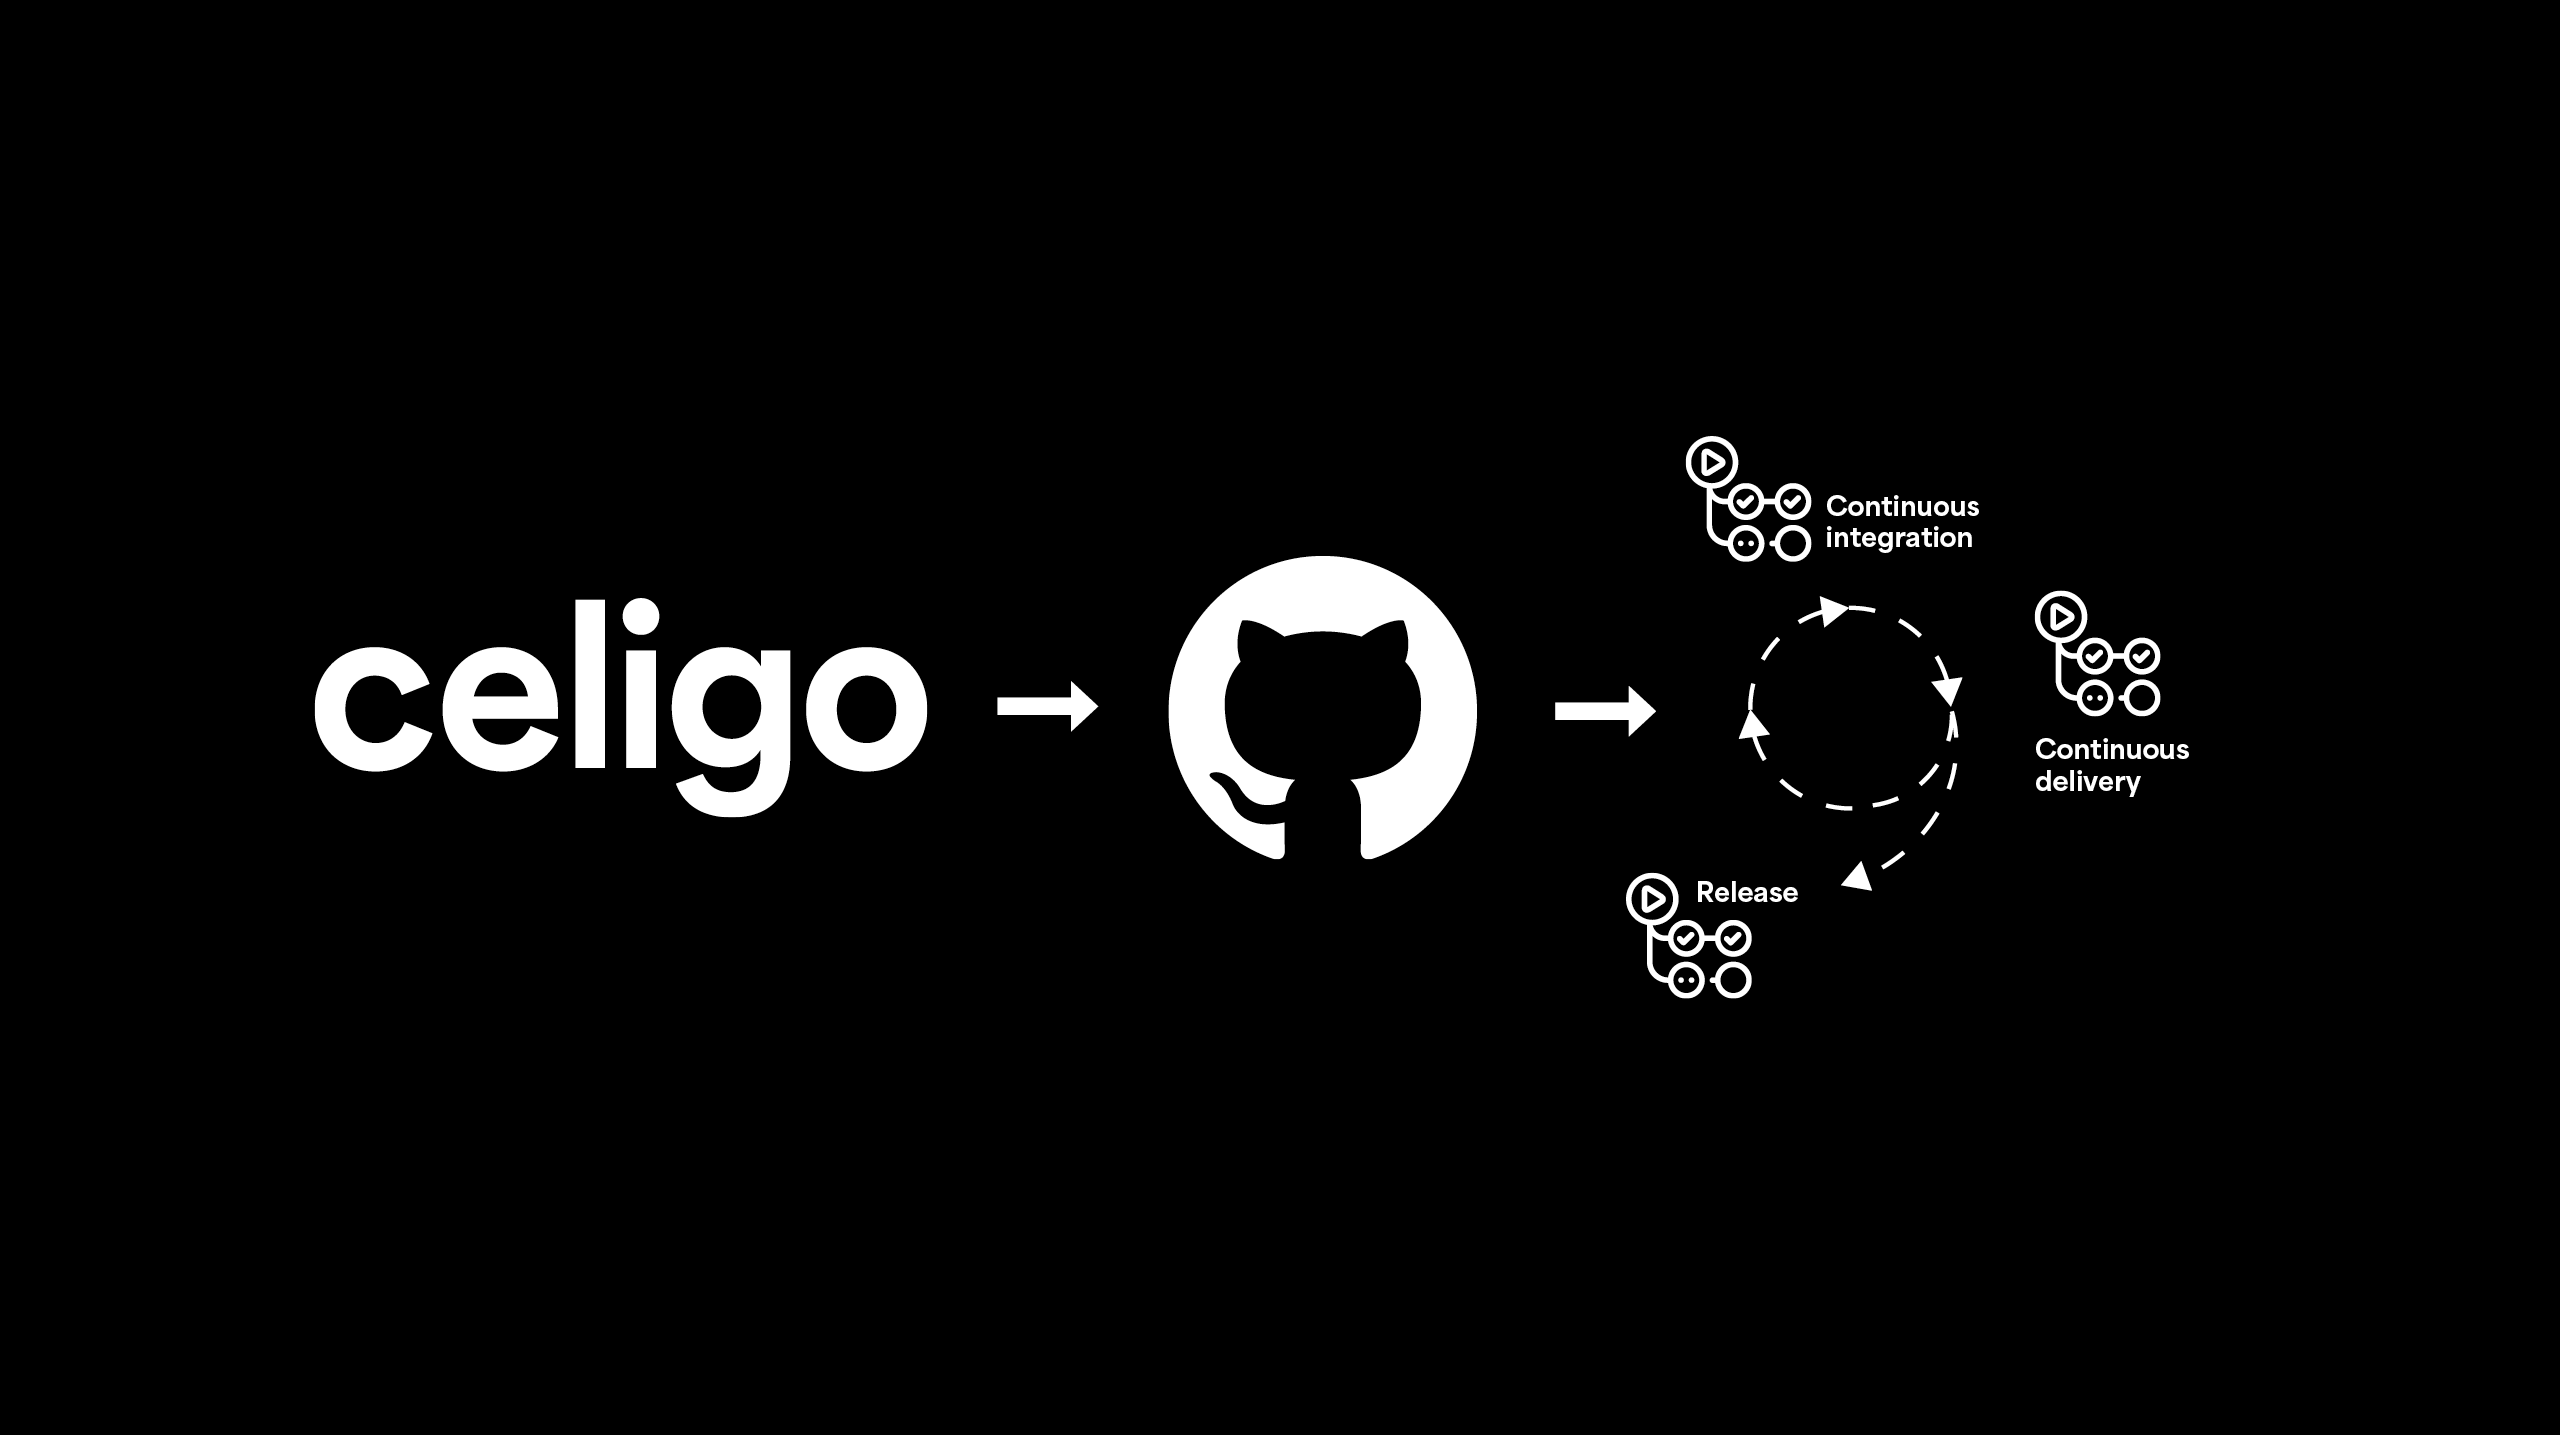 Git integrations and CI CD pipeline in Celigo